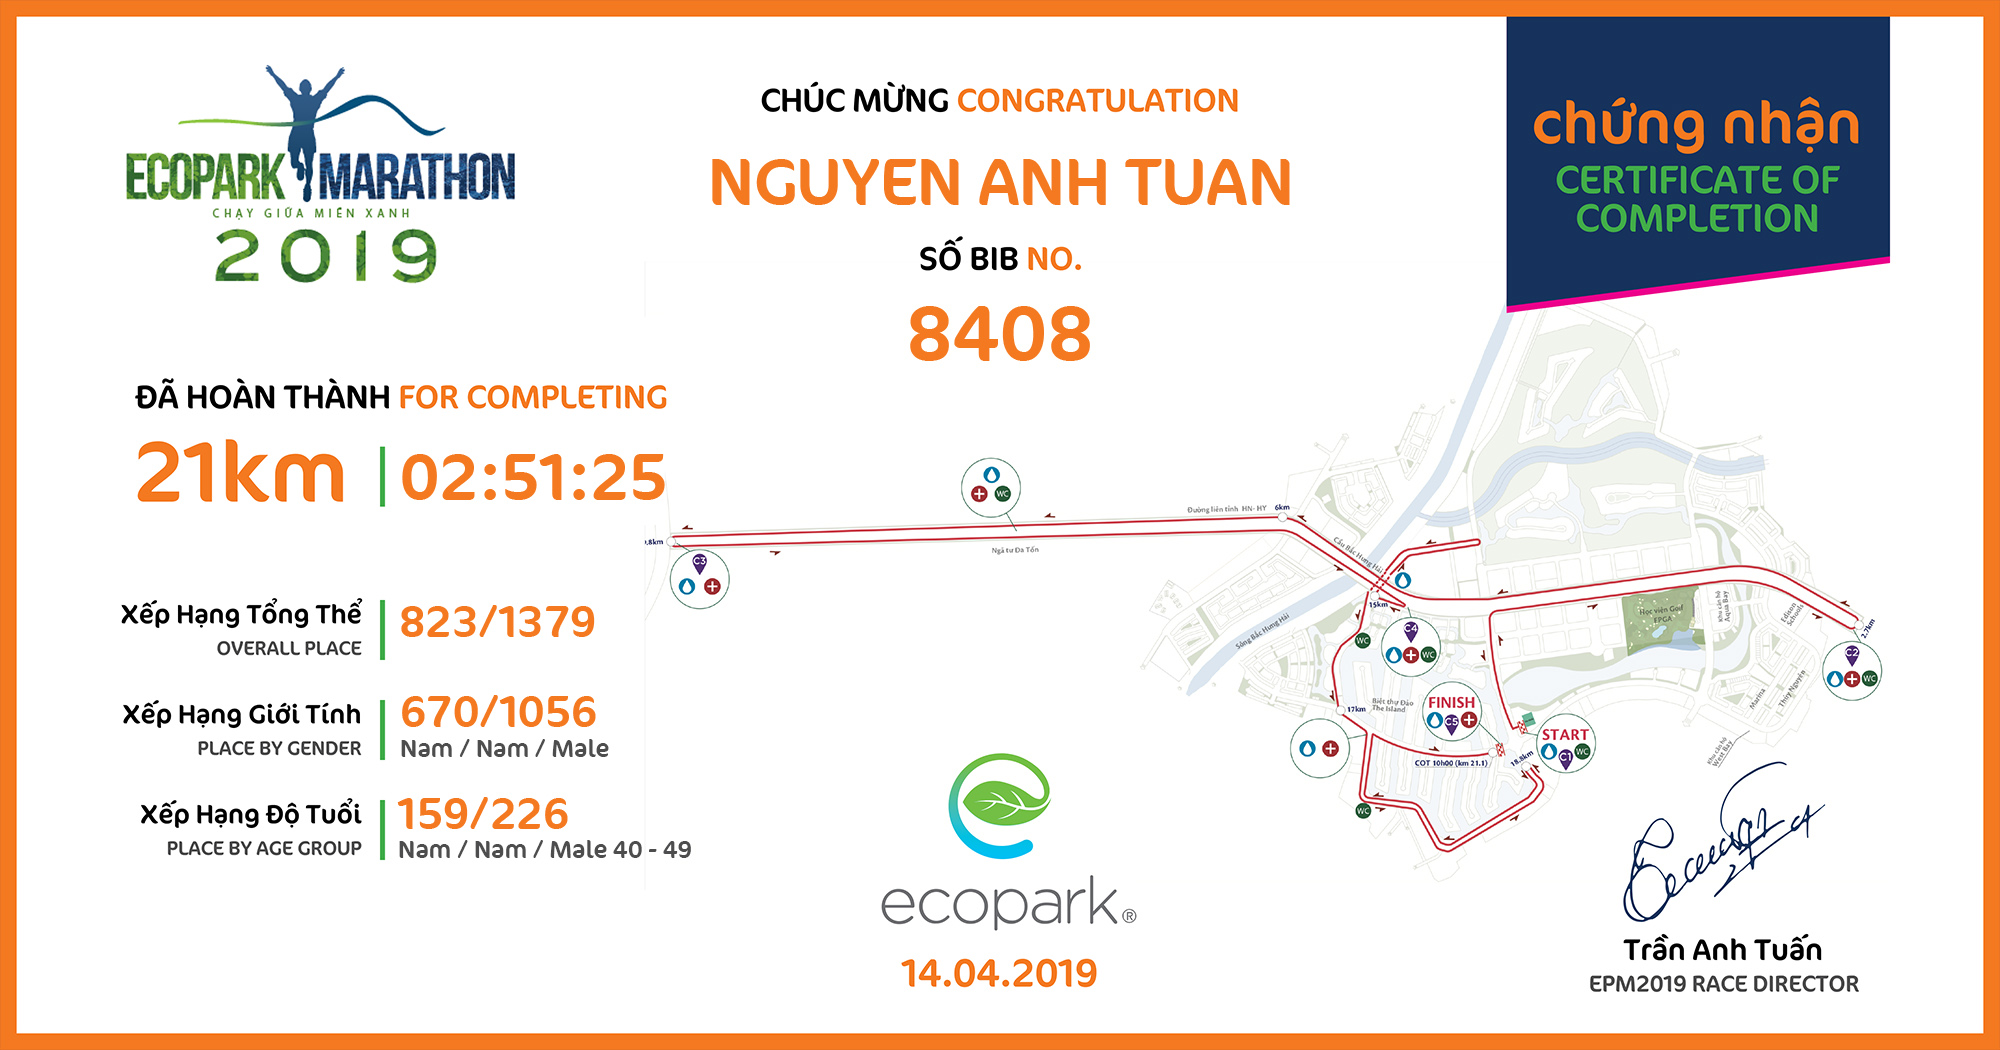 8408 - Nguyen Anh Tuan